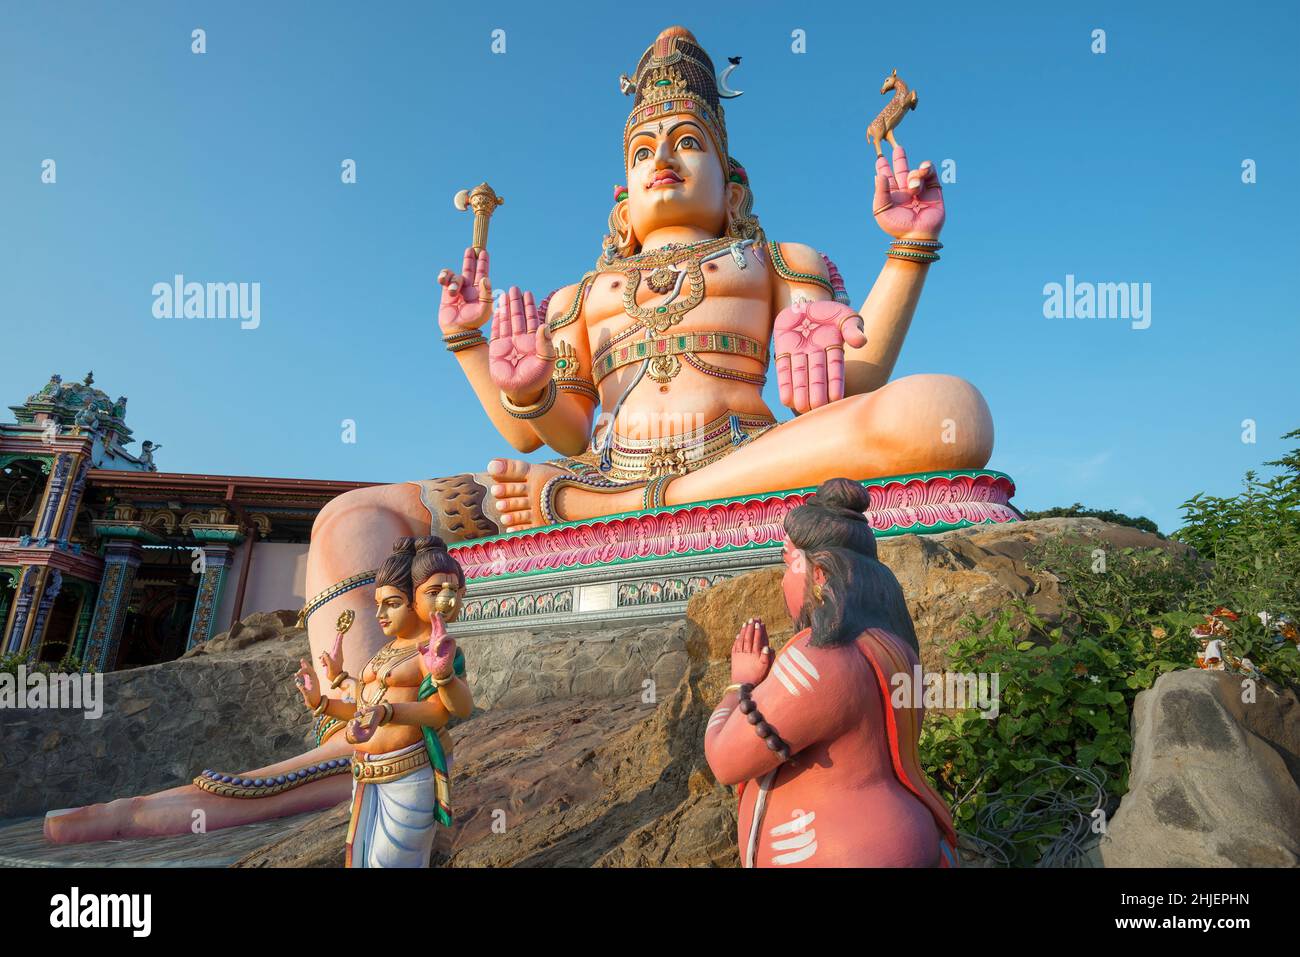 TRINCOMALEE, SRI LANKA - FEBRUARY 08, 2020: At the foot of the statue of Shiva. Hindu temple complex Koneswaram Temple Stock Photo